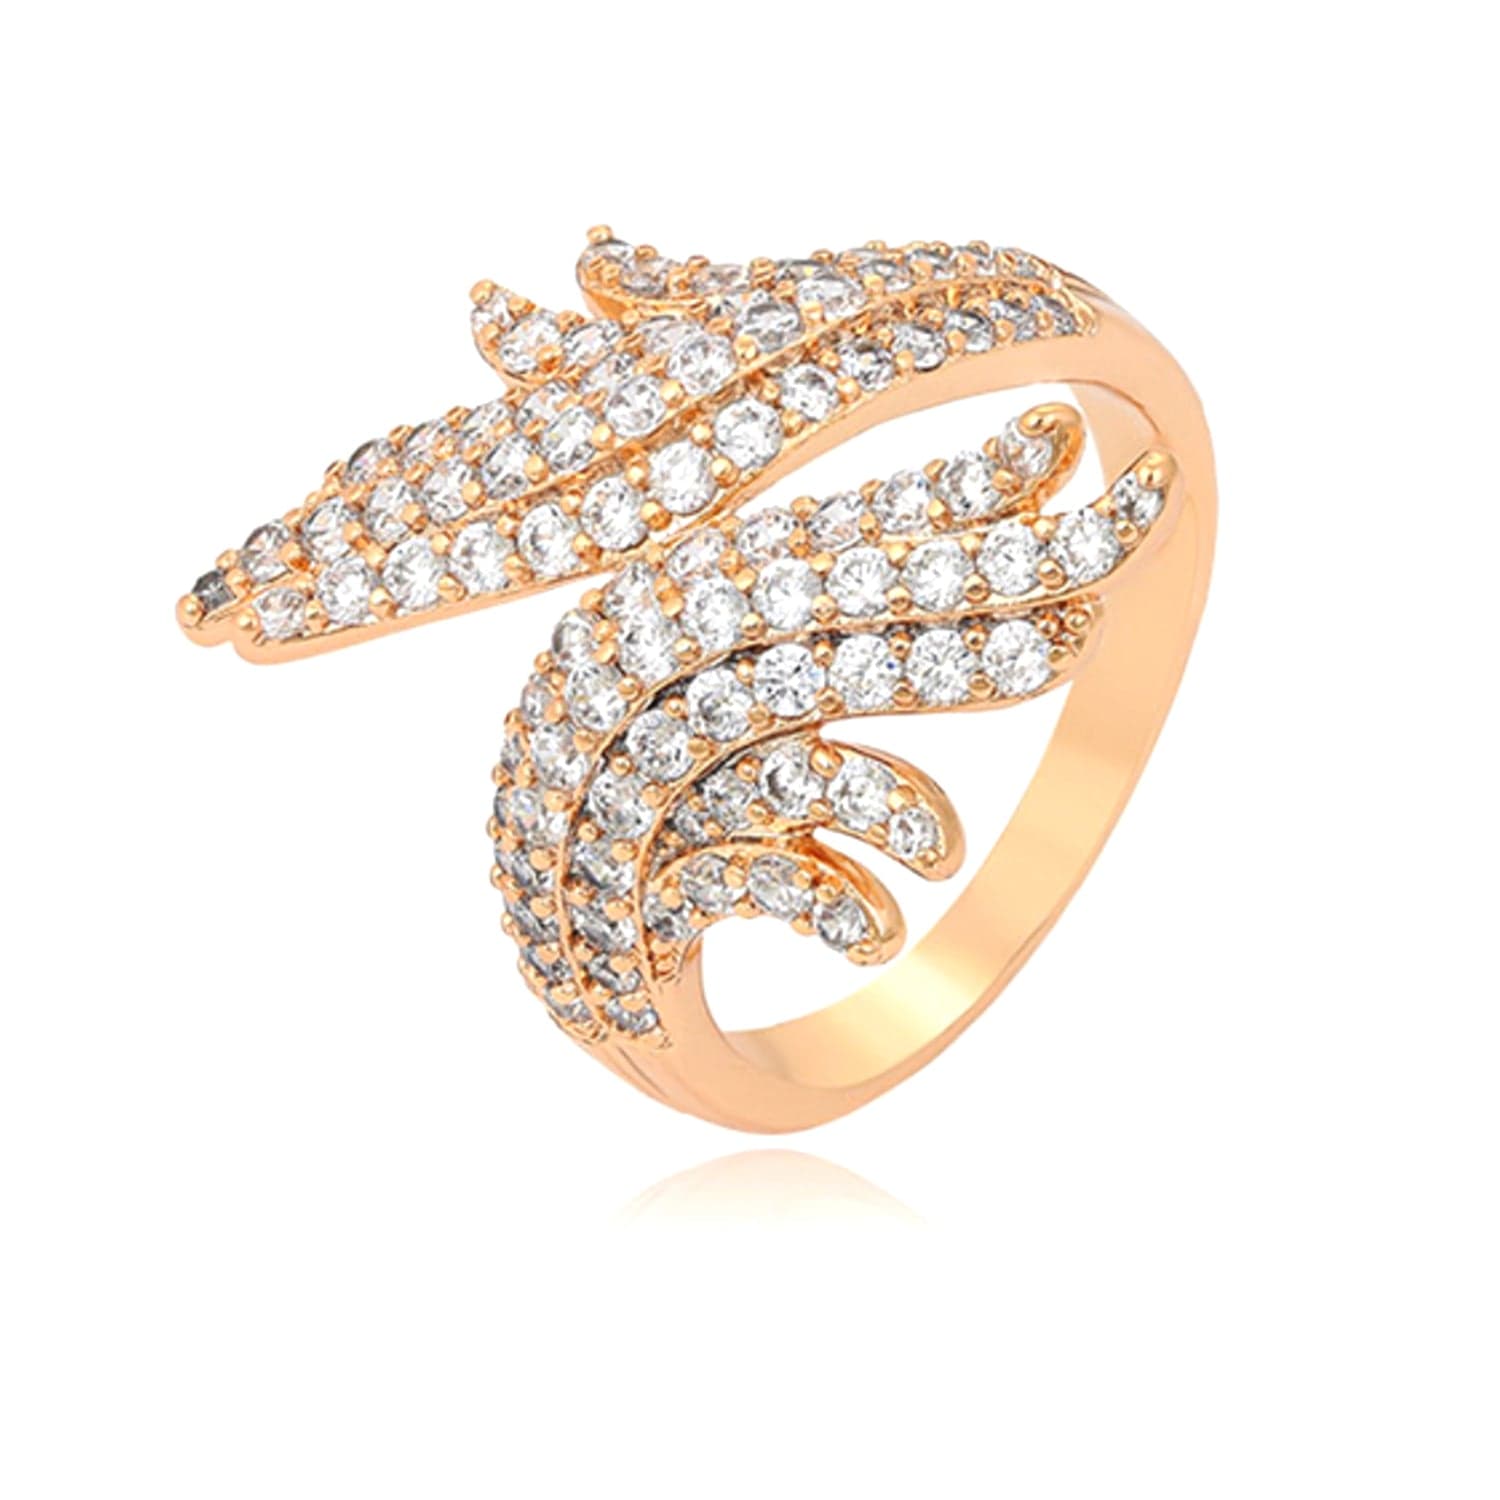 bianco rosso Rings X000702555 cyprus greece jewelry gift free shipping europe worldwide